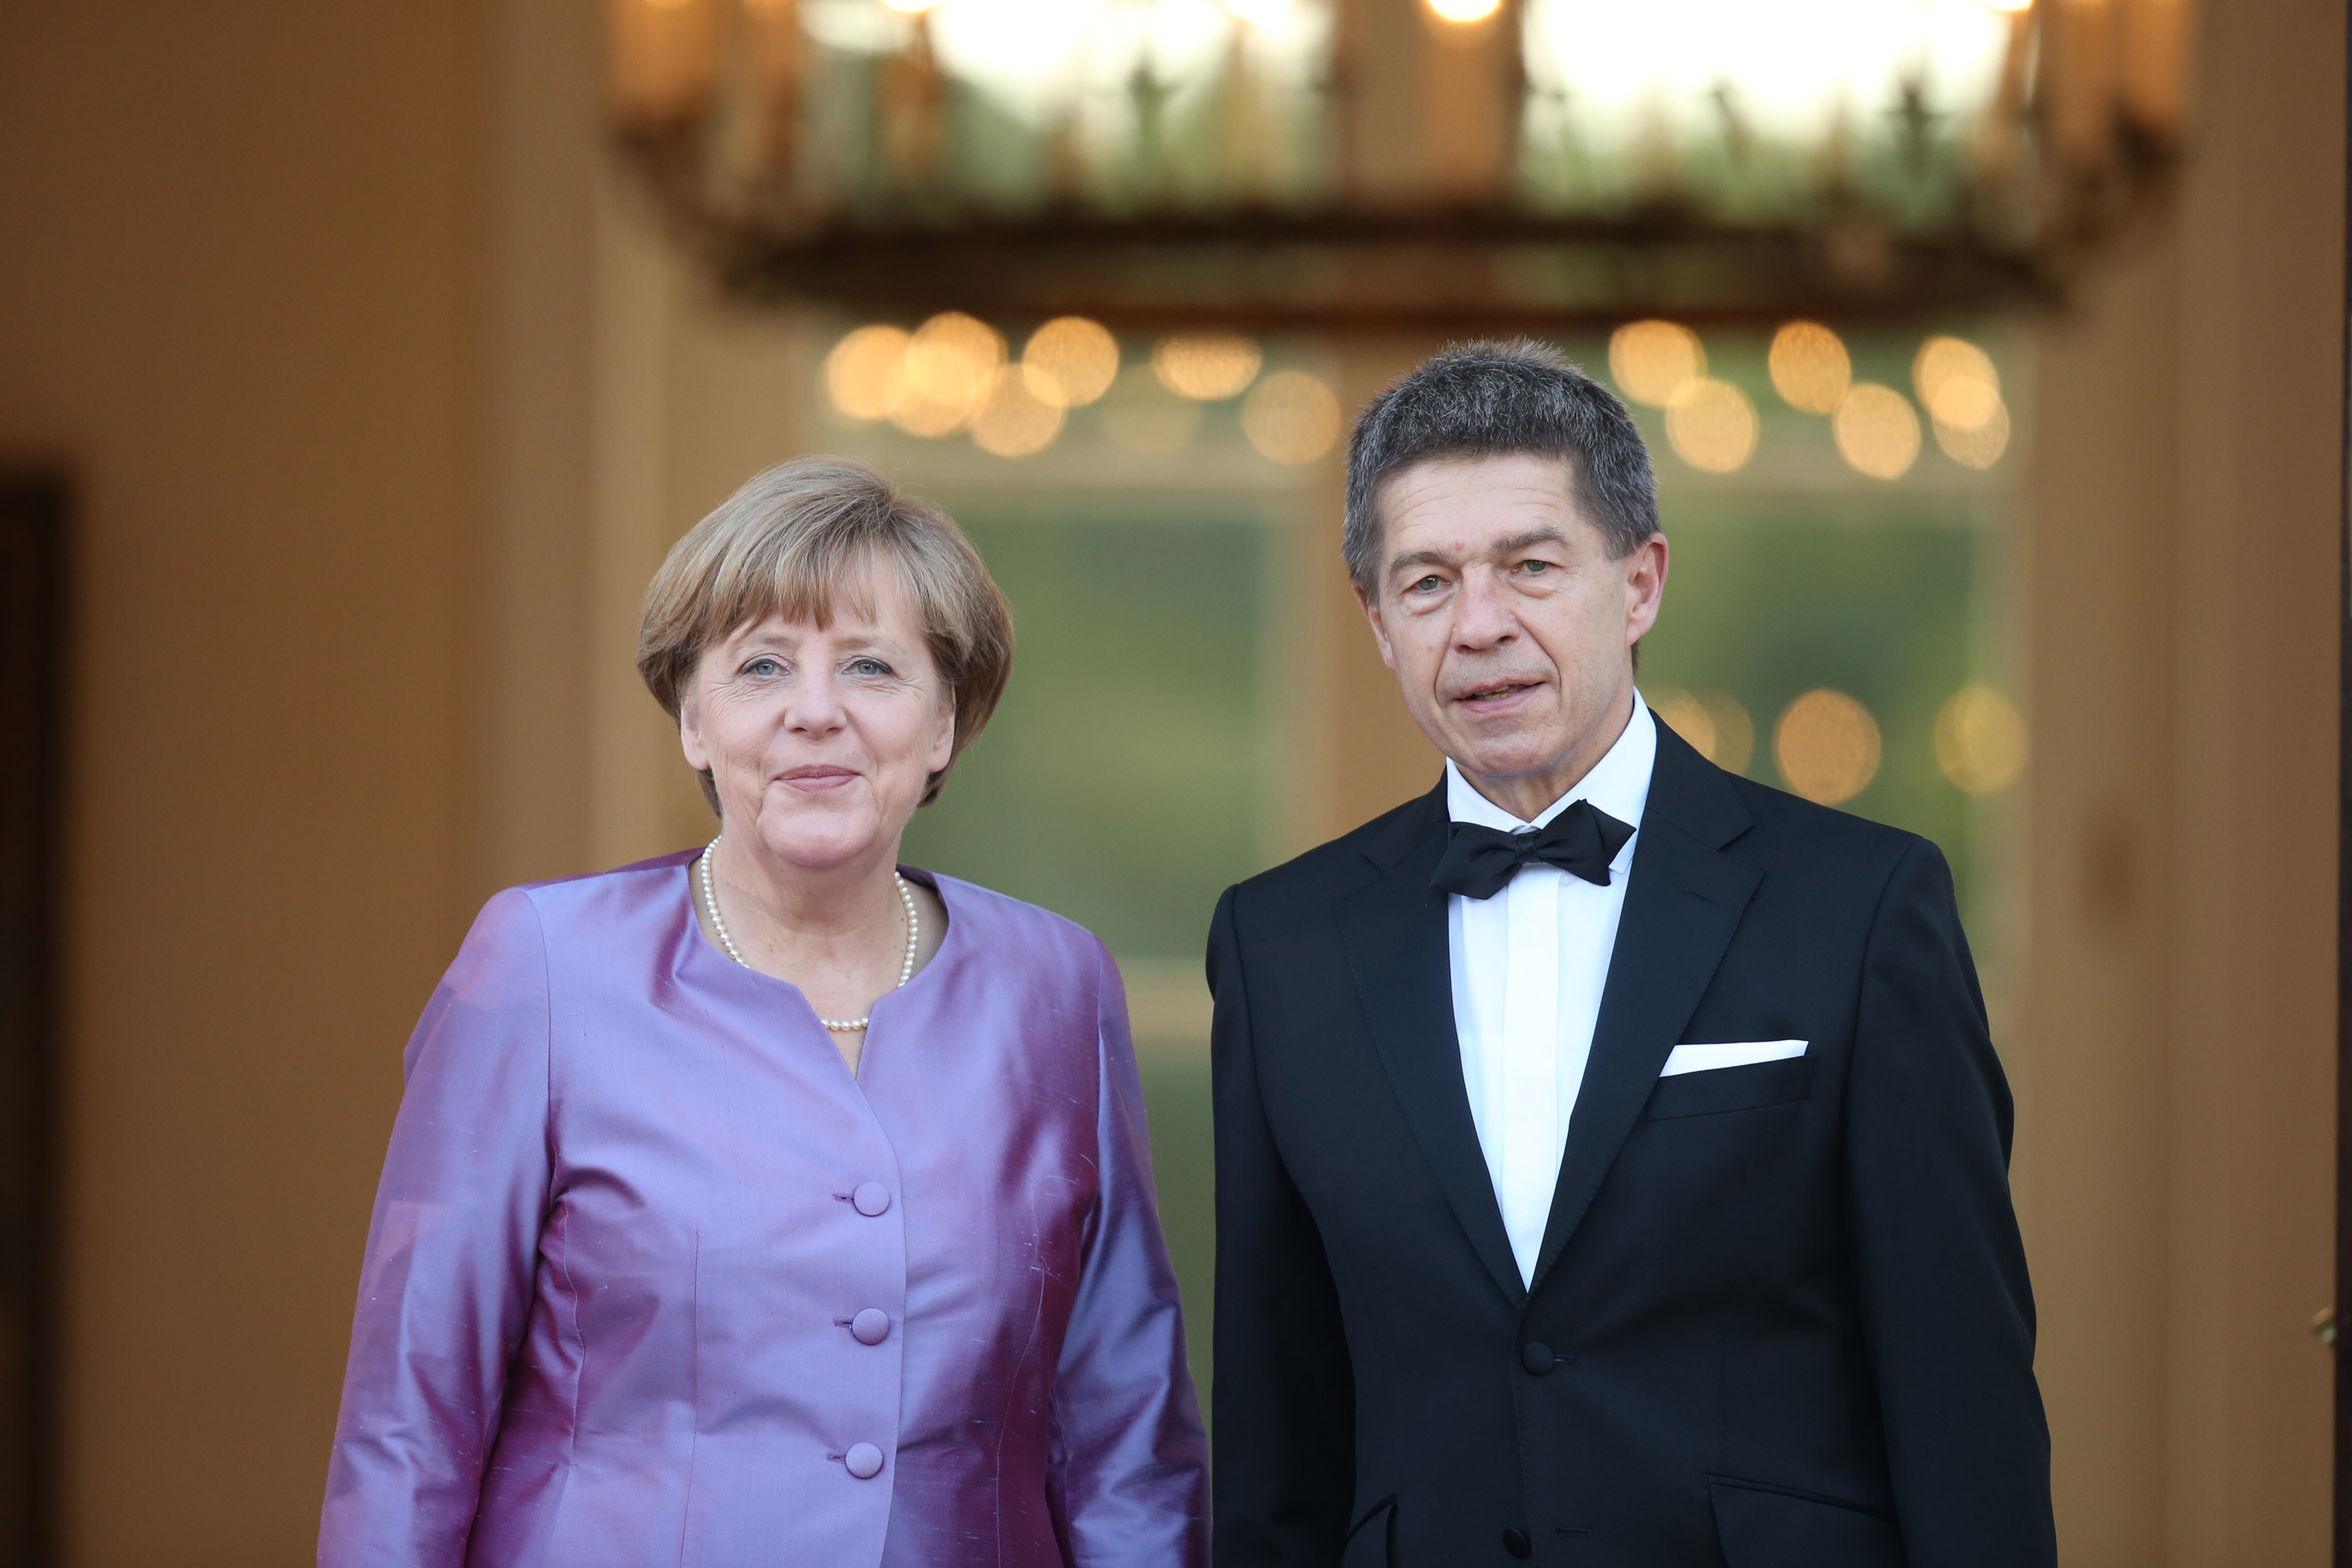 Chancellor Angela Merkel and her husband Joachim Sauer arrive at the Schloss Bellevue Palace on June 24, 2015 in Berlin.